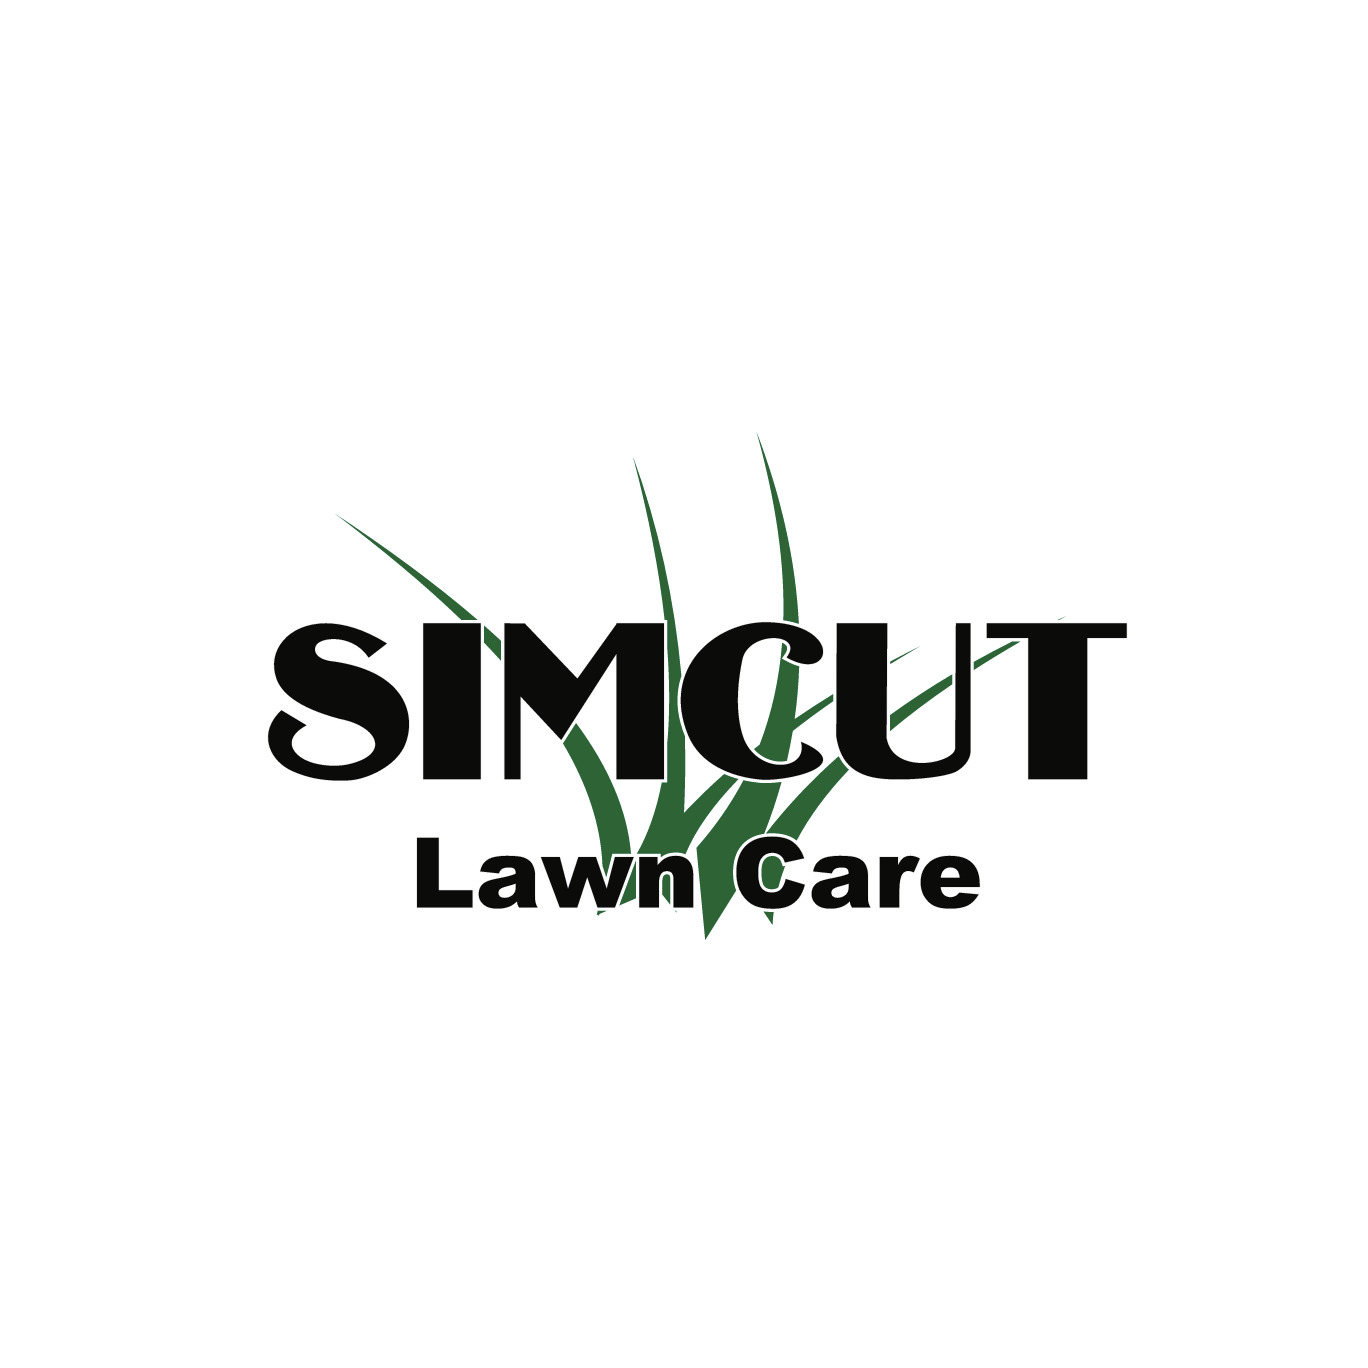 Simcut Lawn Care